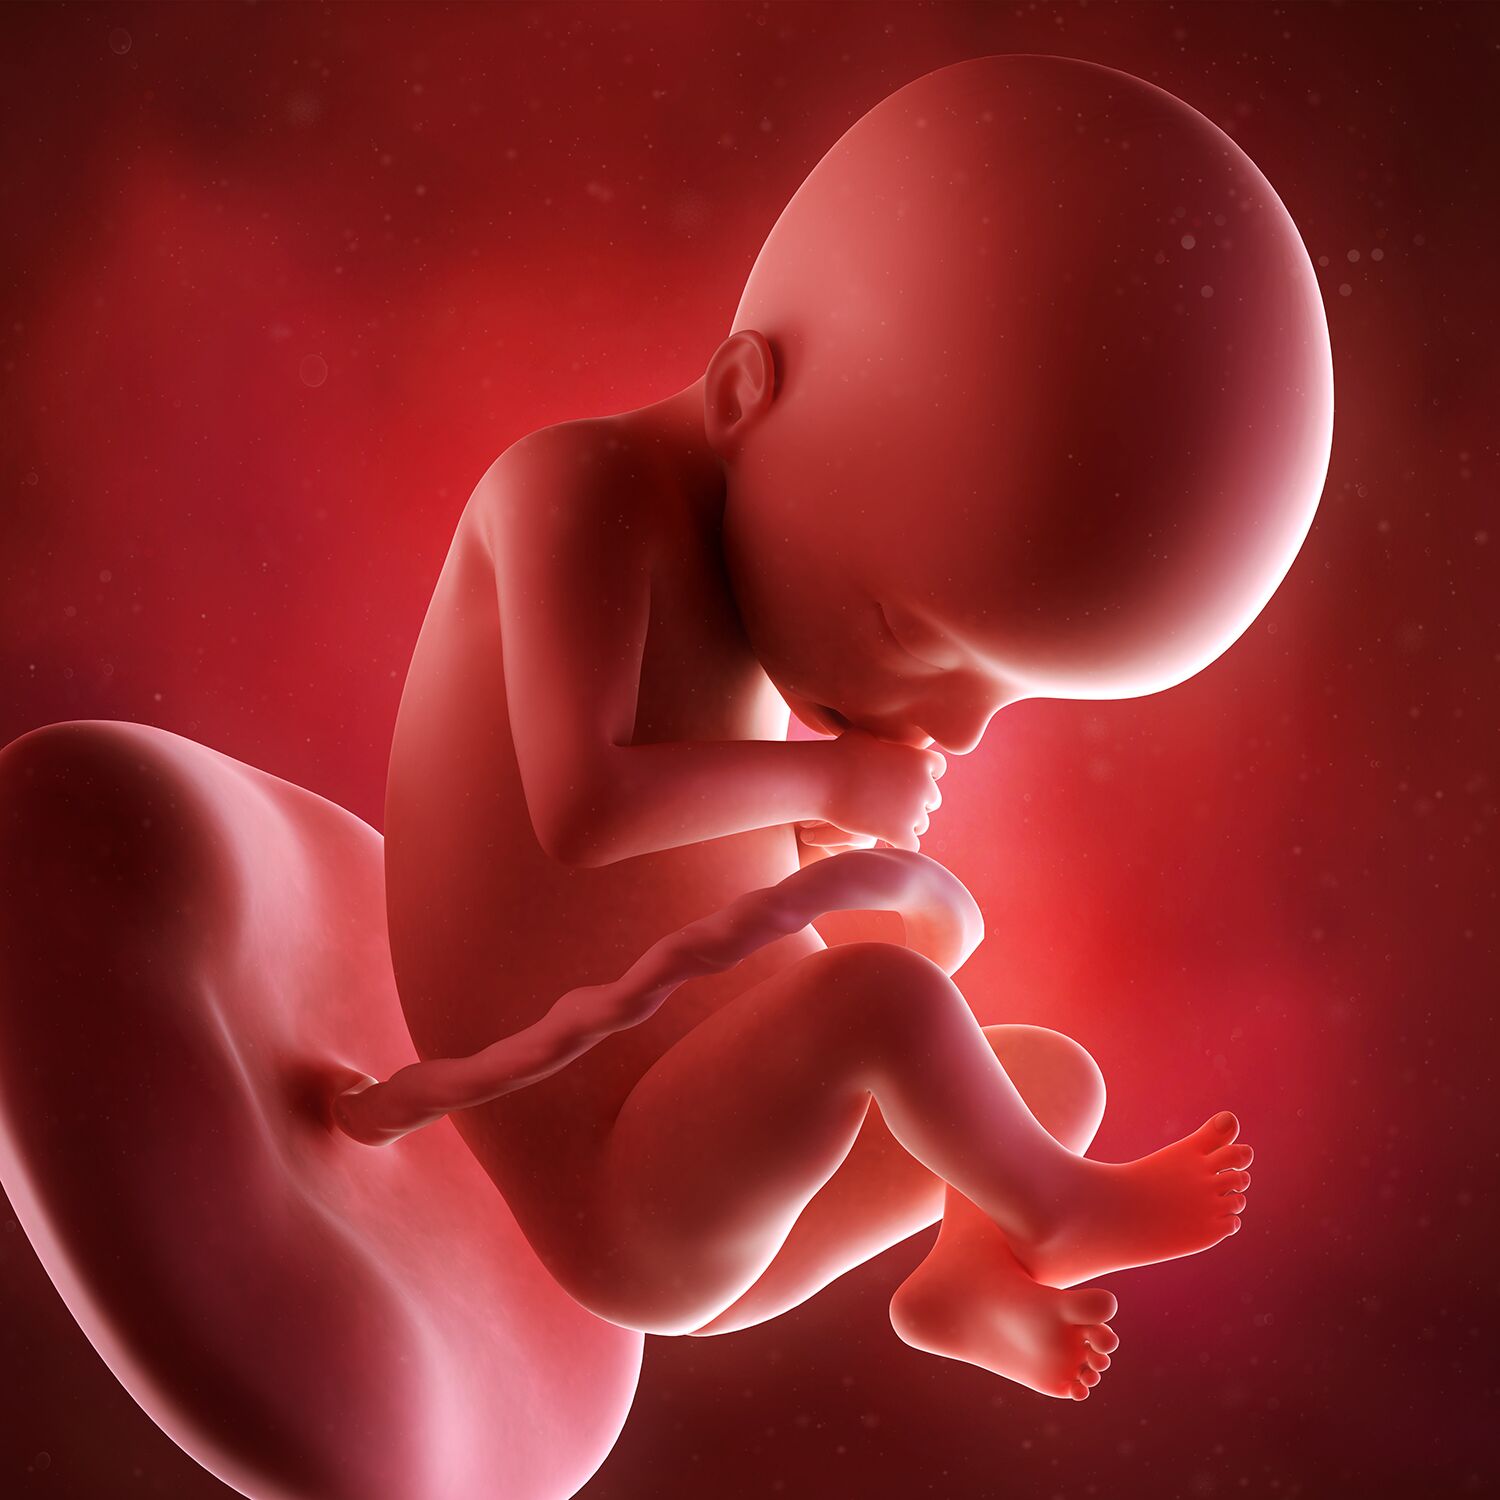 Ребенок в животе 2 неделя. Плод на 22 неделе беременности. Зародыш на 22 недели беременности. Ребёнок в 22 недели беременности. Младенец 22 недели беременности.